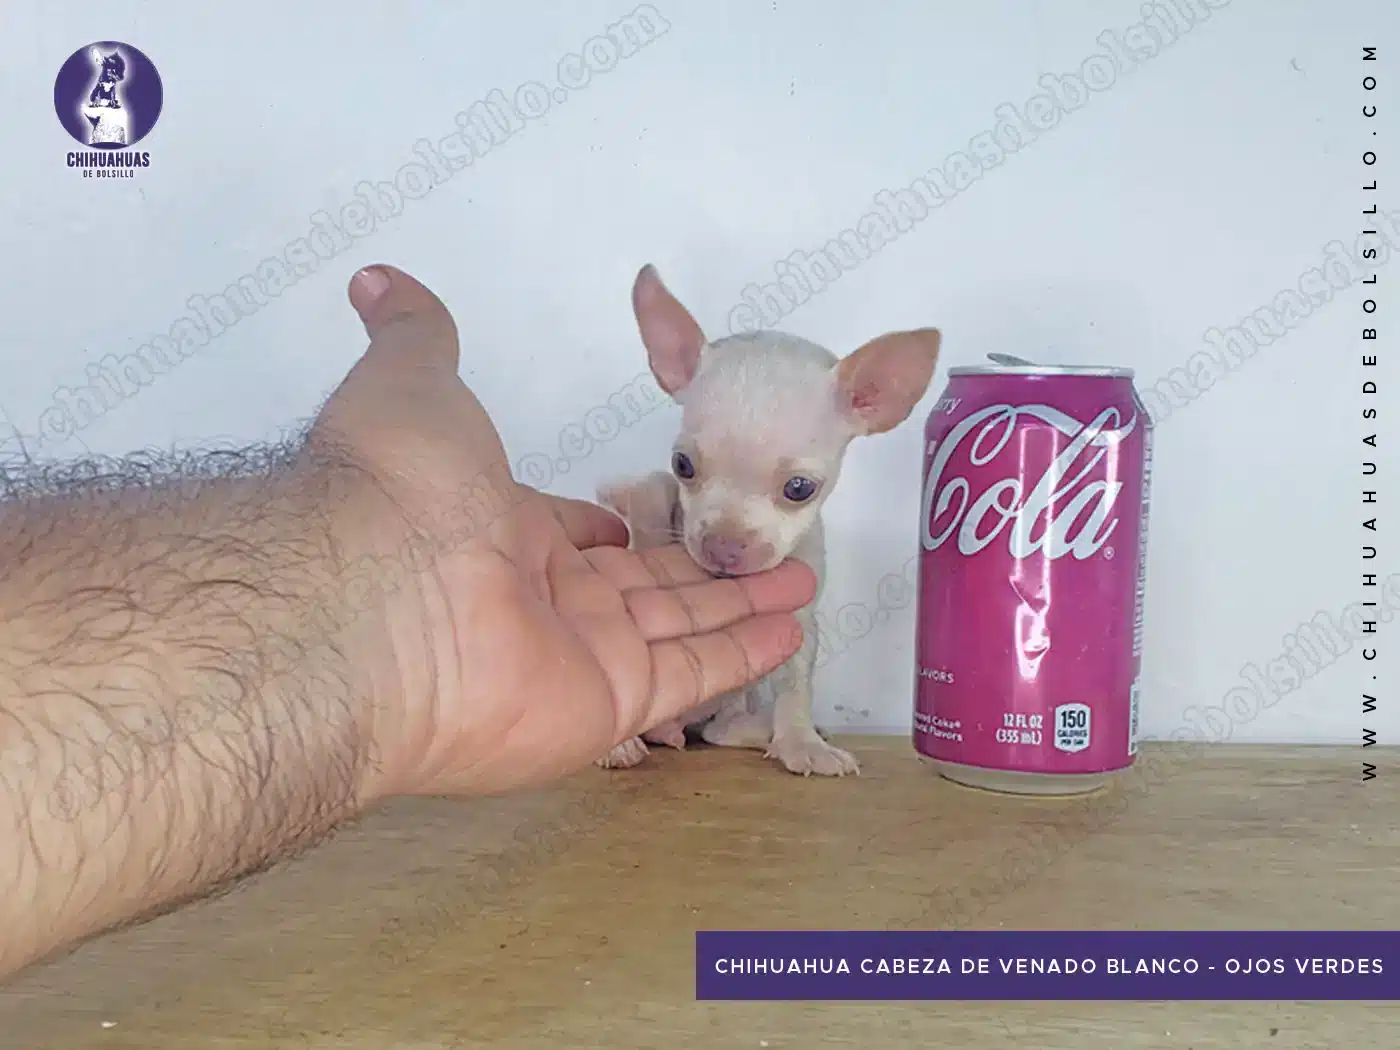 Chihuahua Cabeza de Venado Blanco